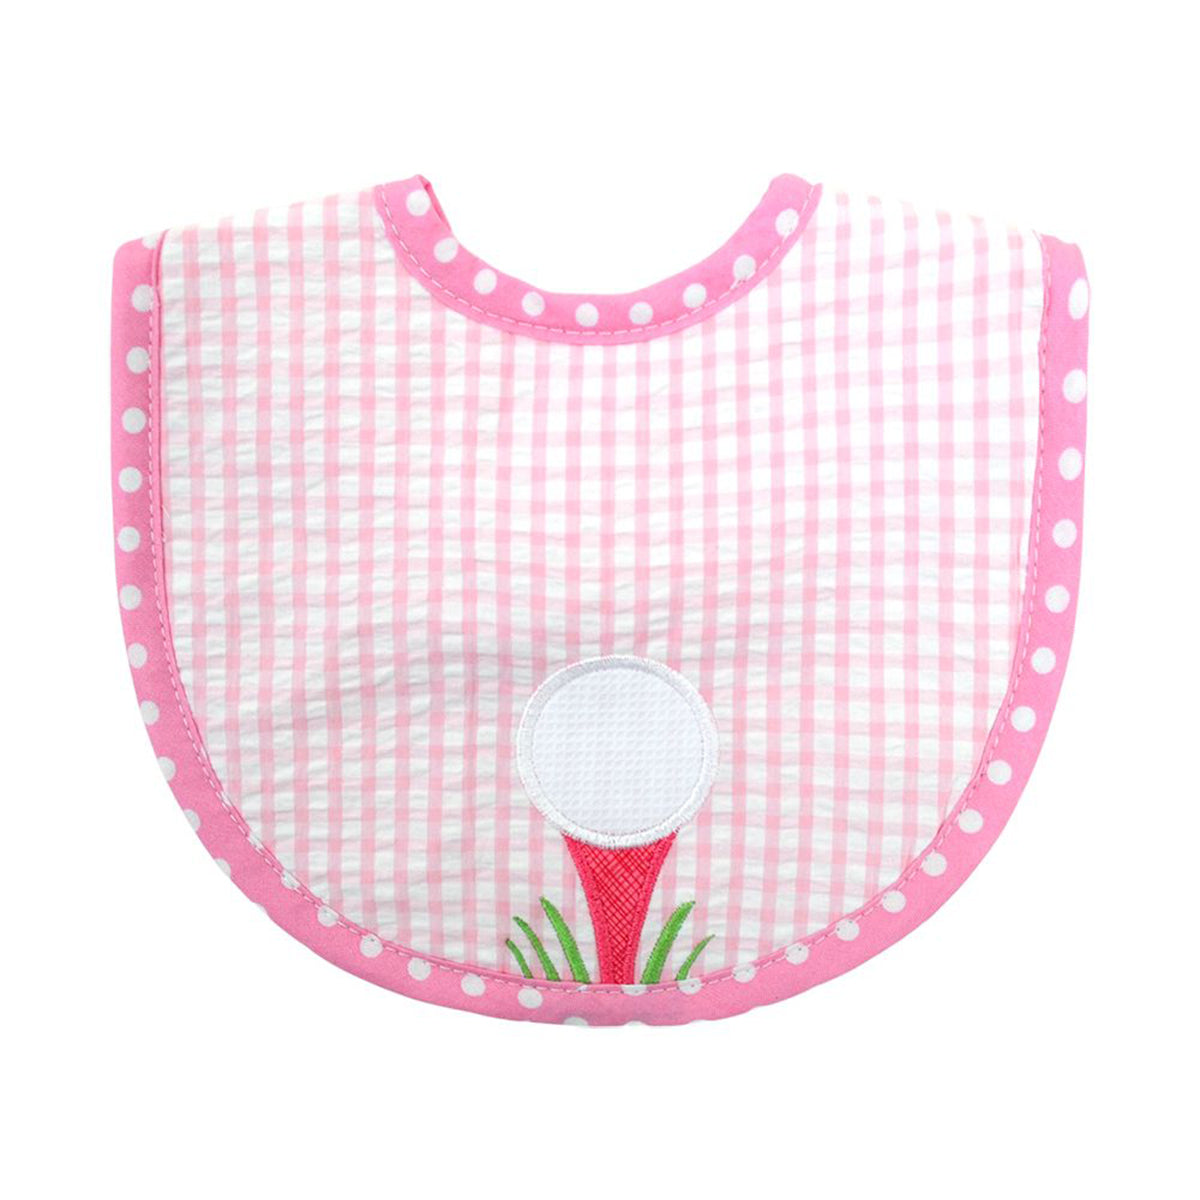 3 Marthas Pink Golf Applique Medium Bib